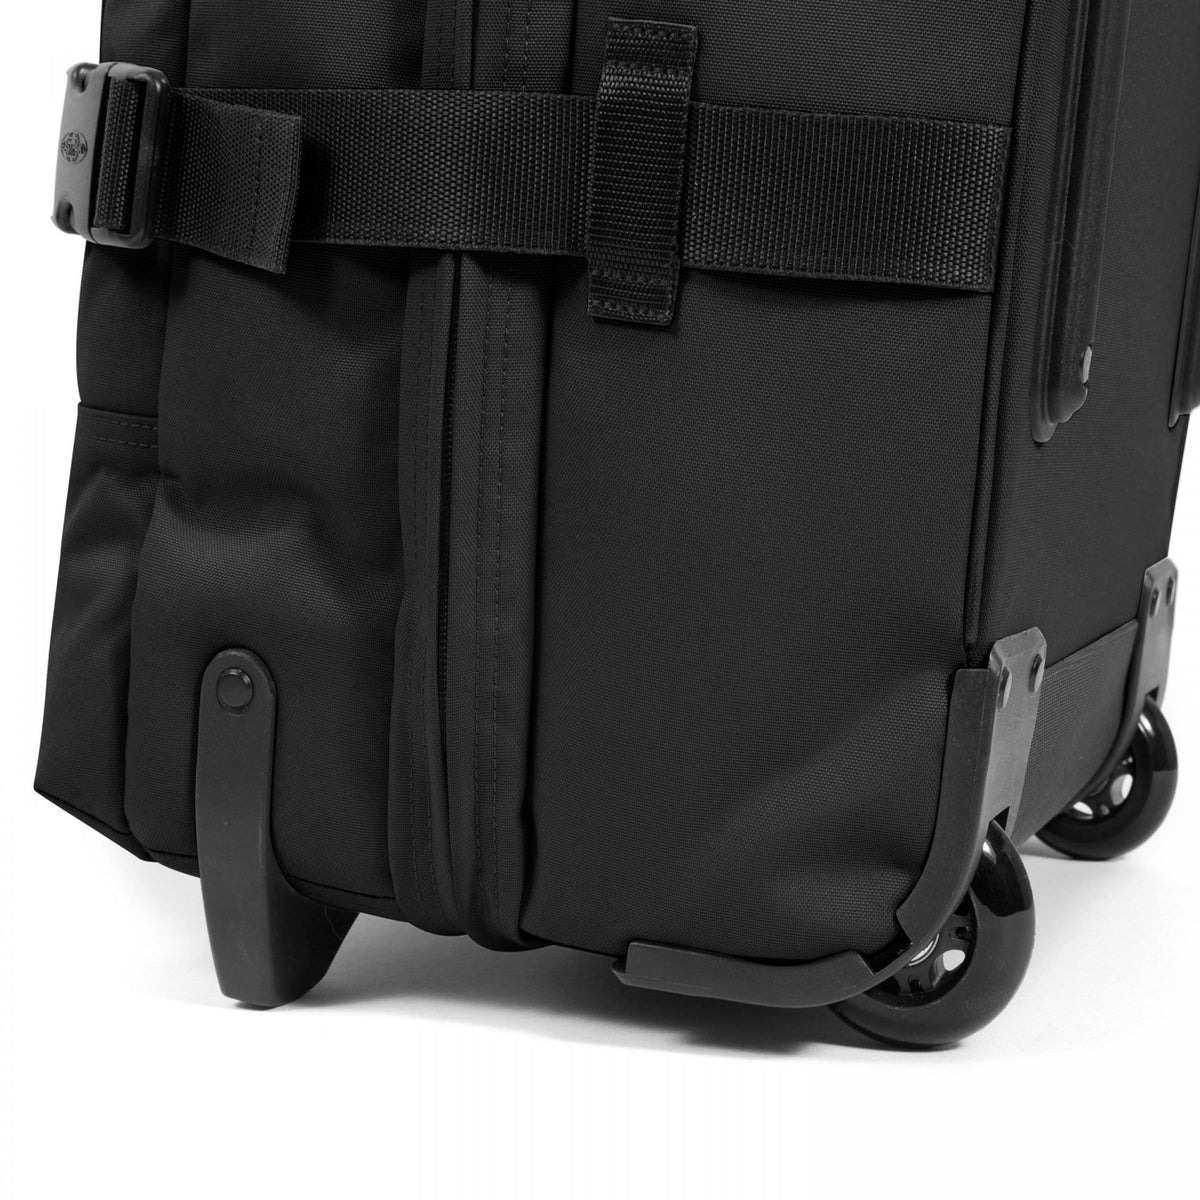 Eastpak Tranverz M Suitcase - Black